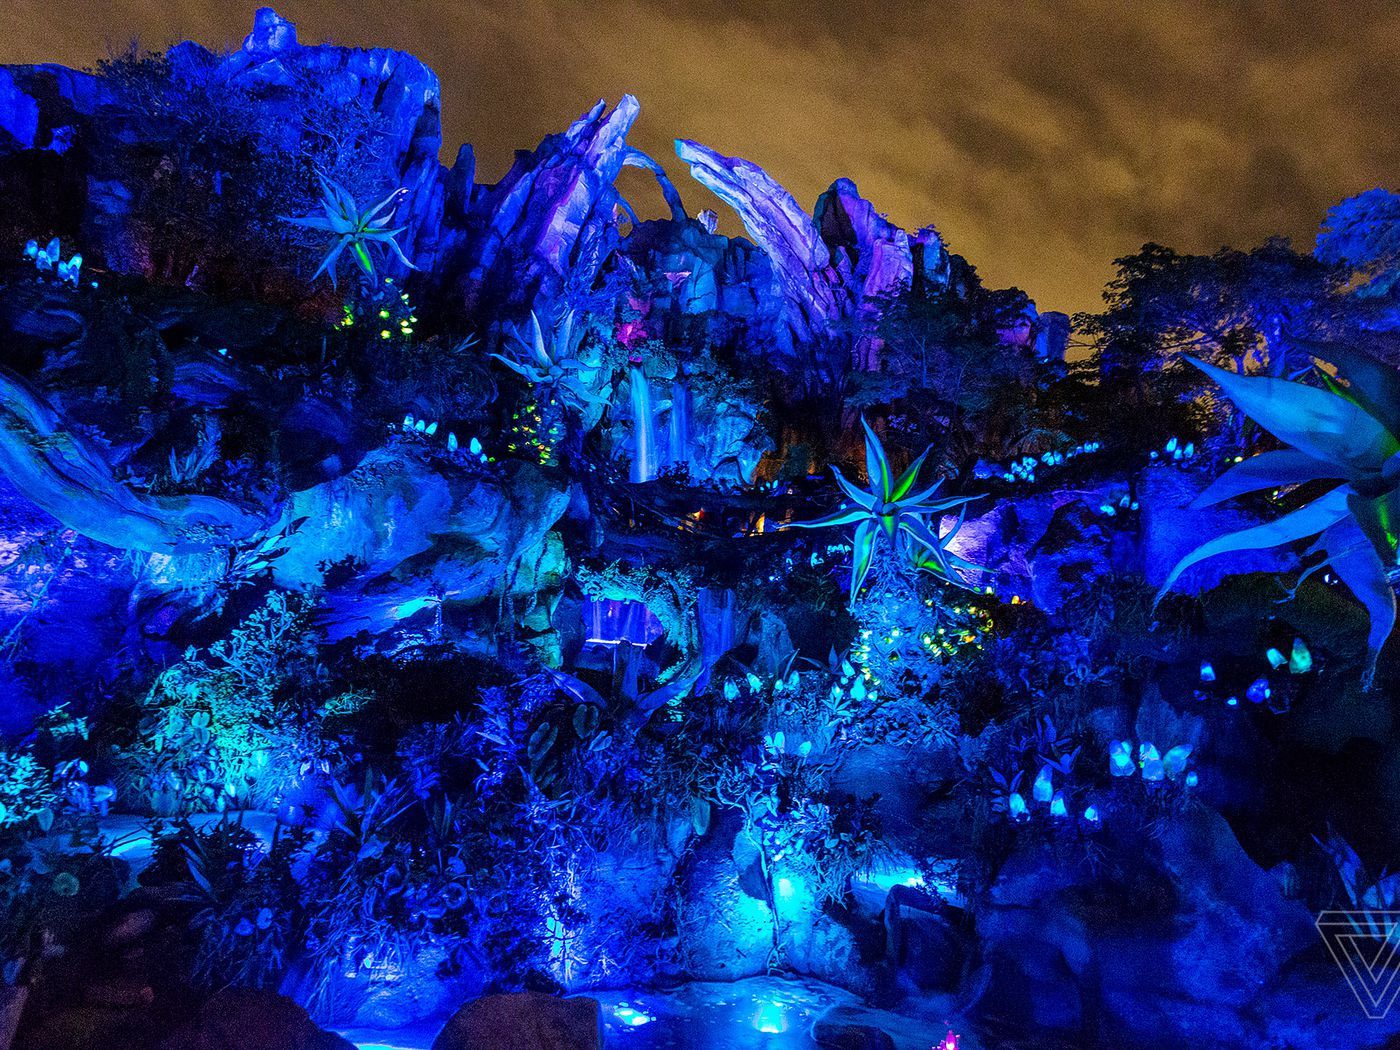 Visiting Pandora: a photo tour of Disney's new Avatar land